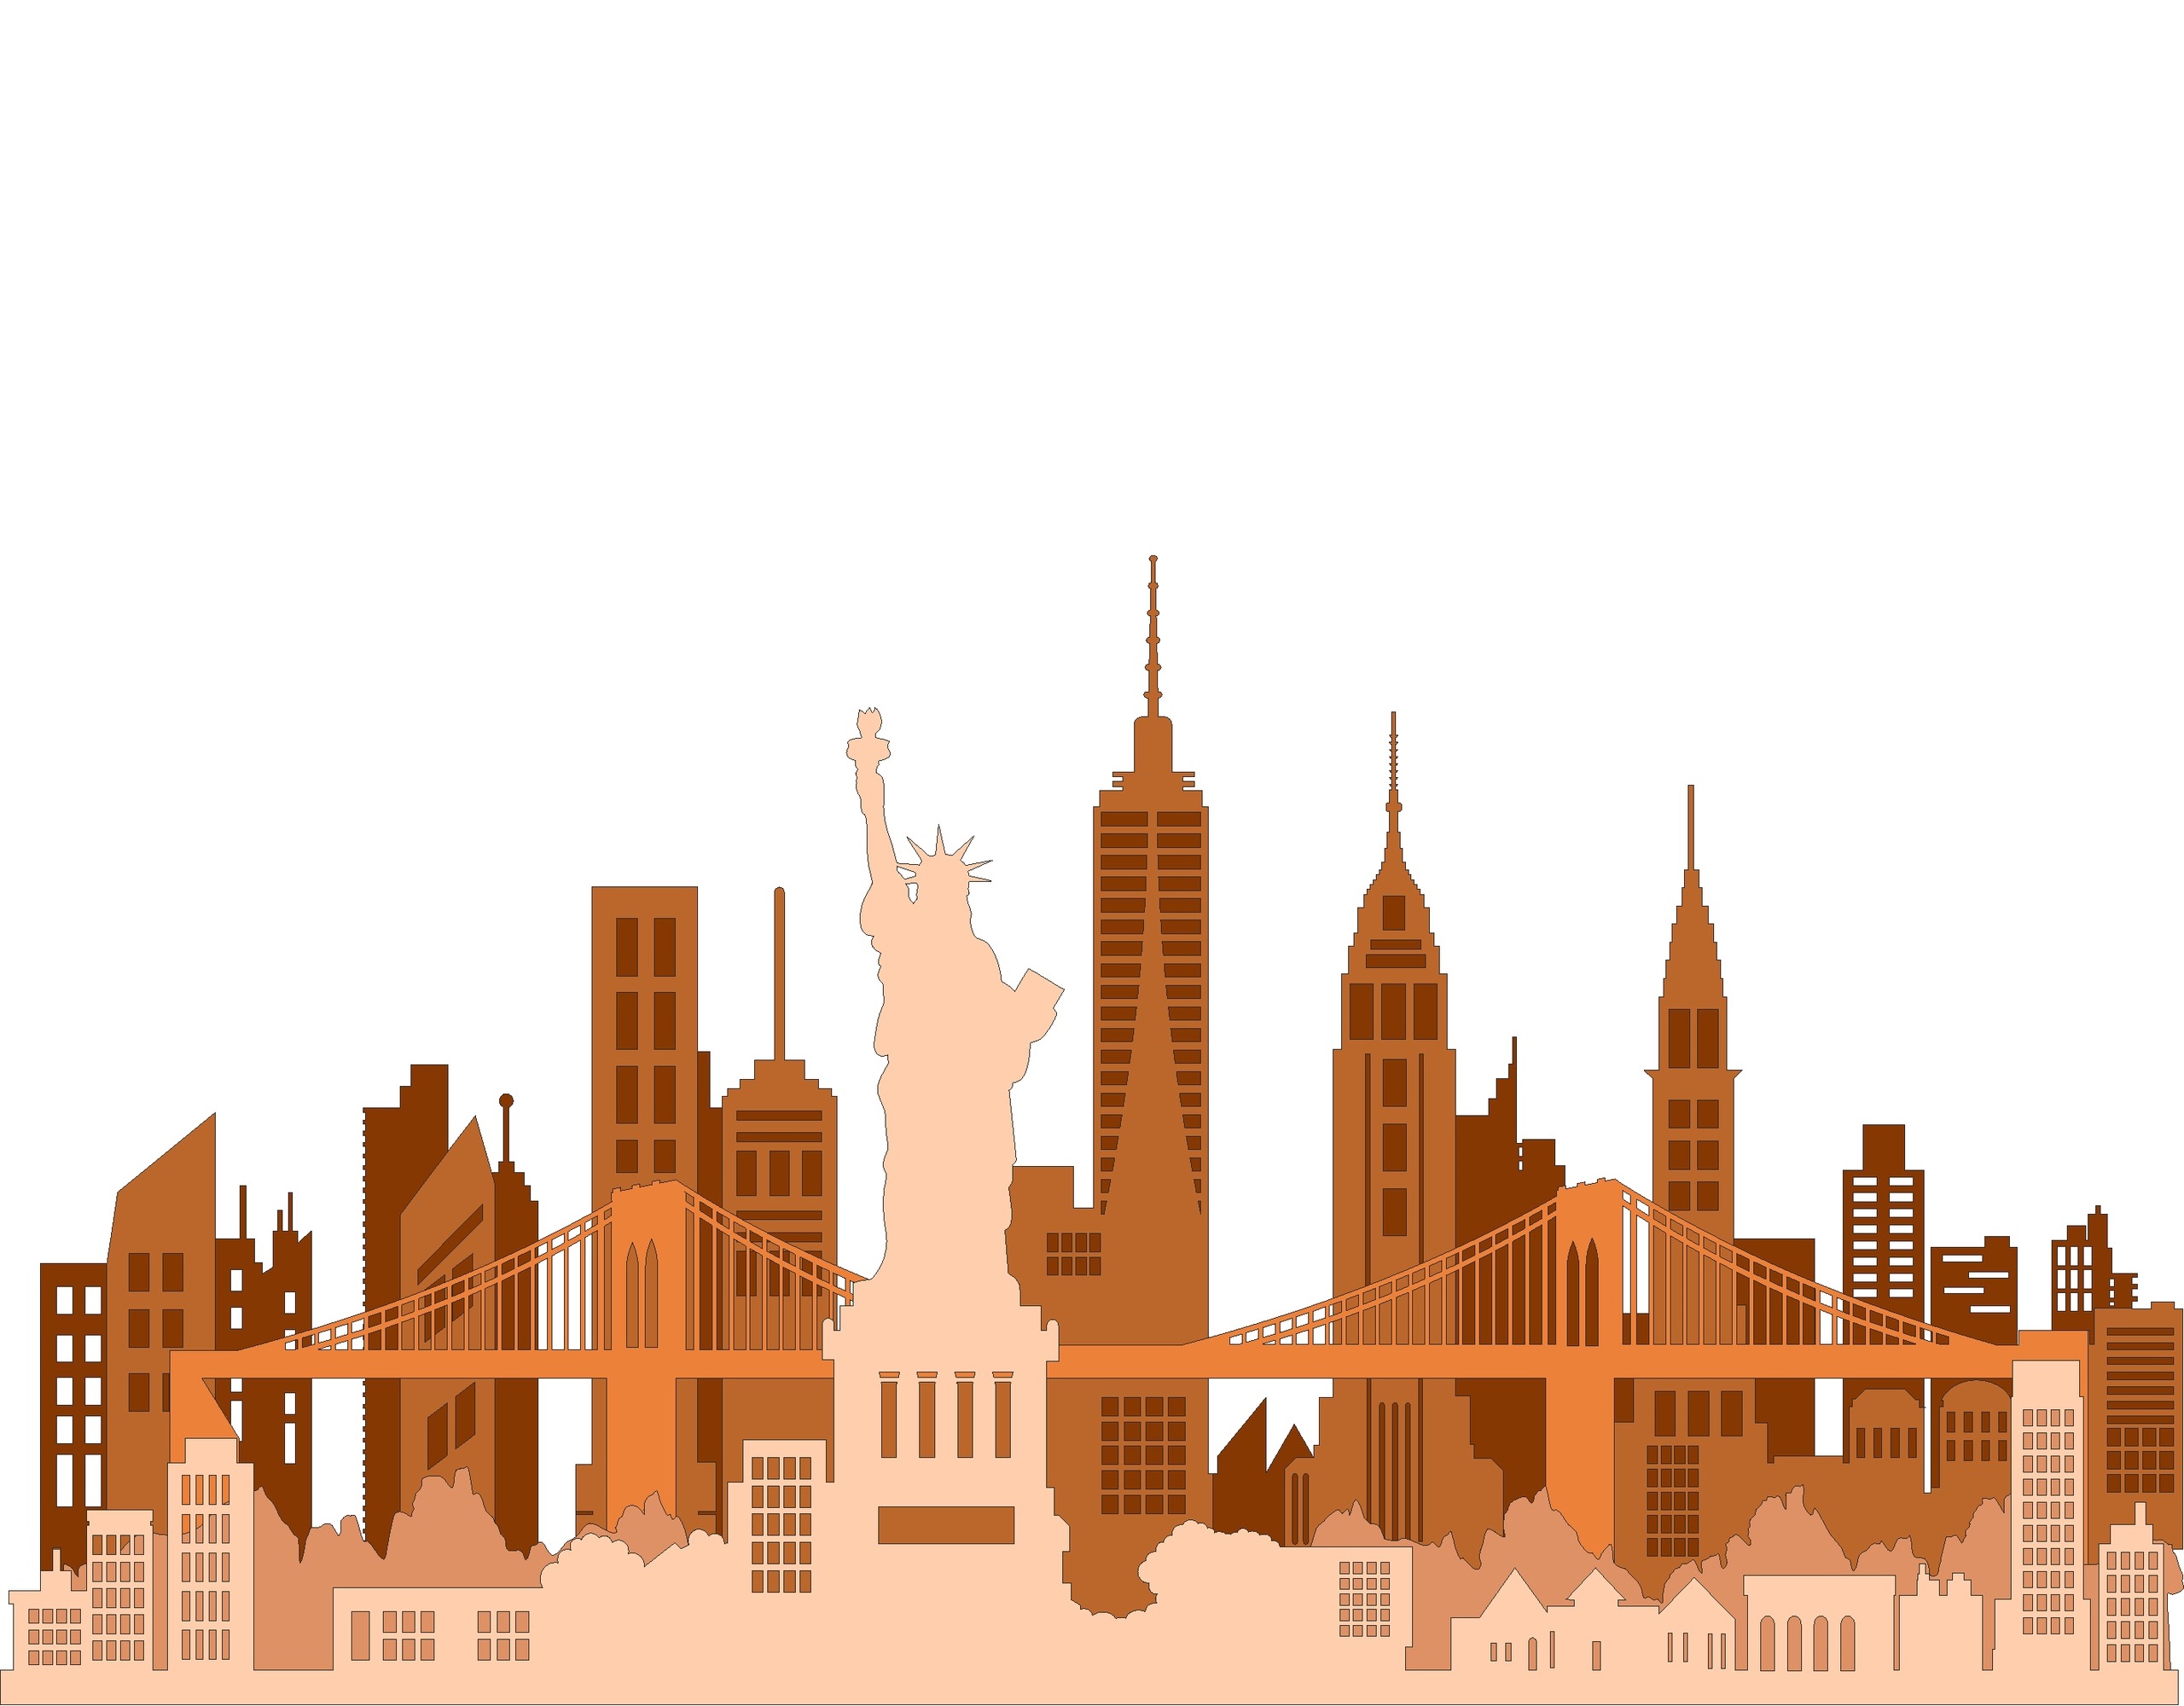 new york city skyline illustration